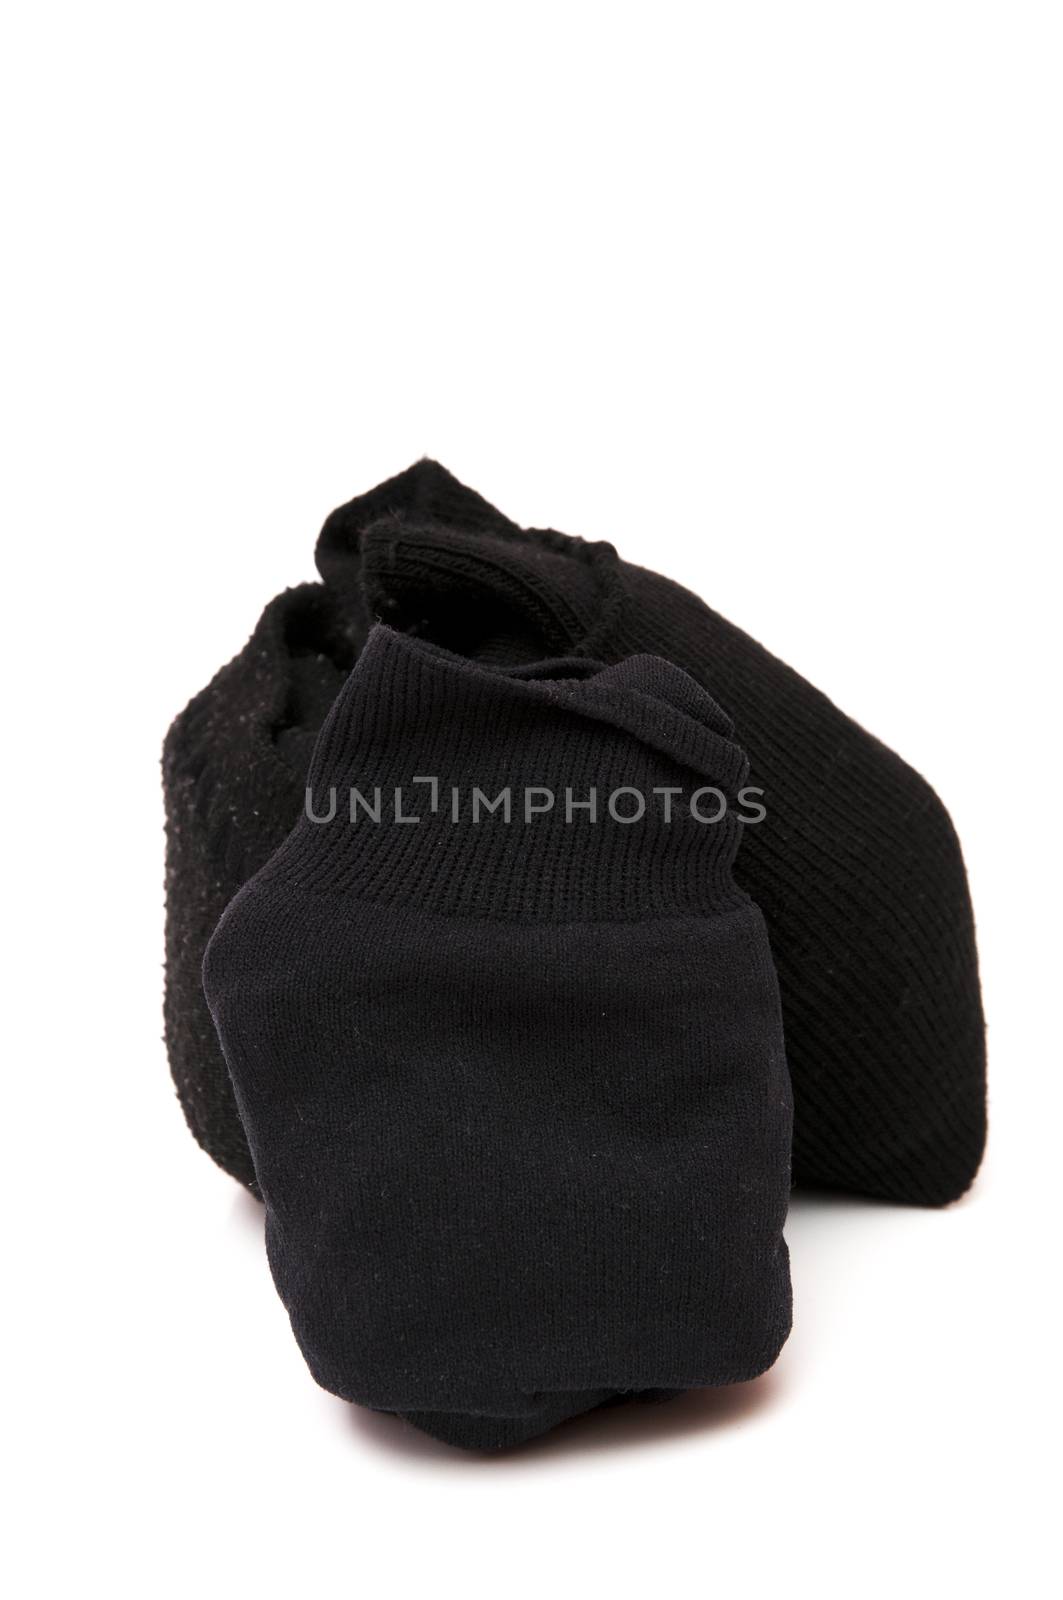 black socks on a white background